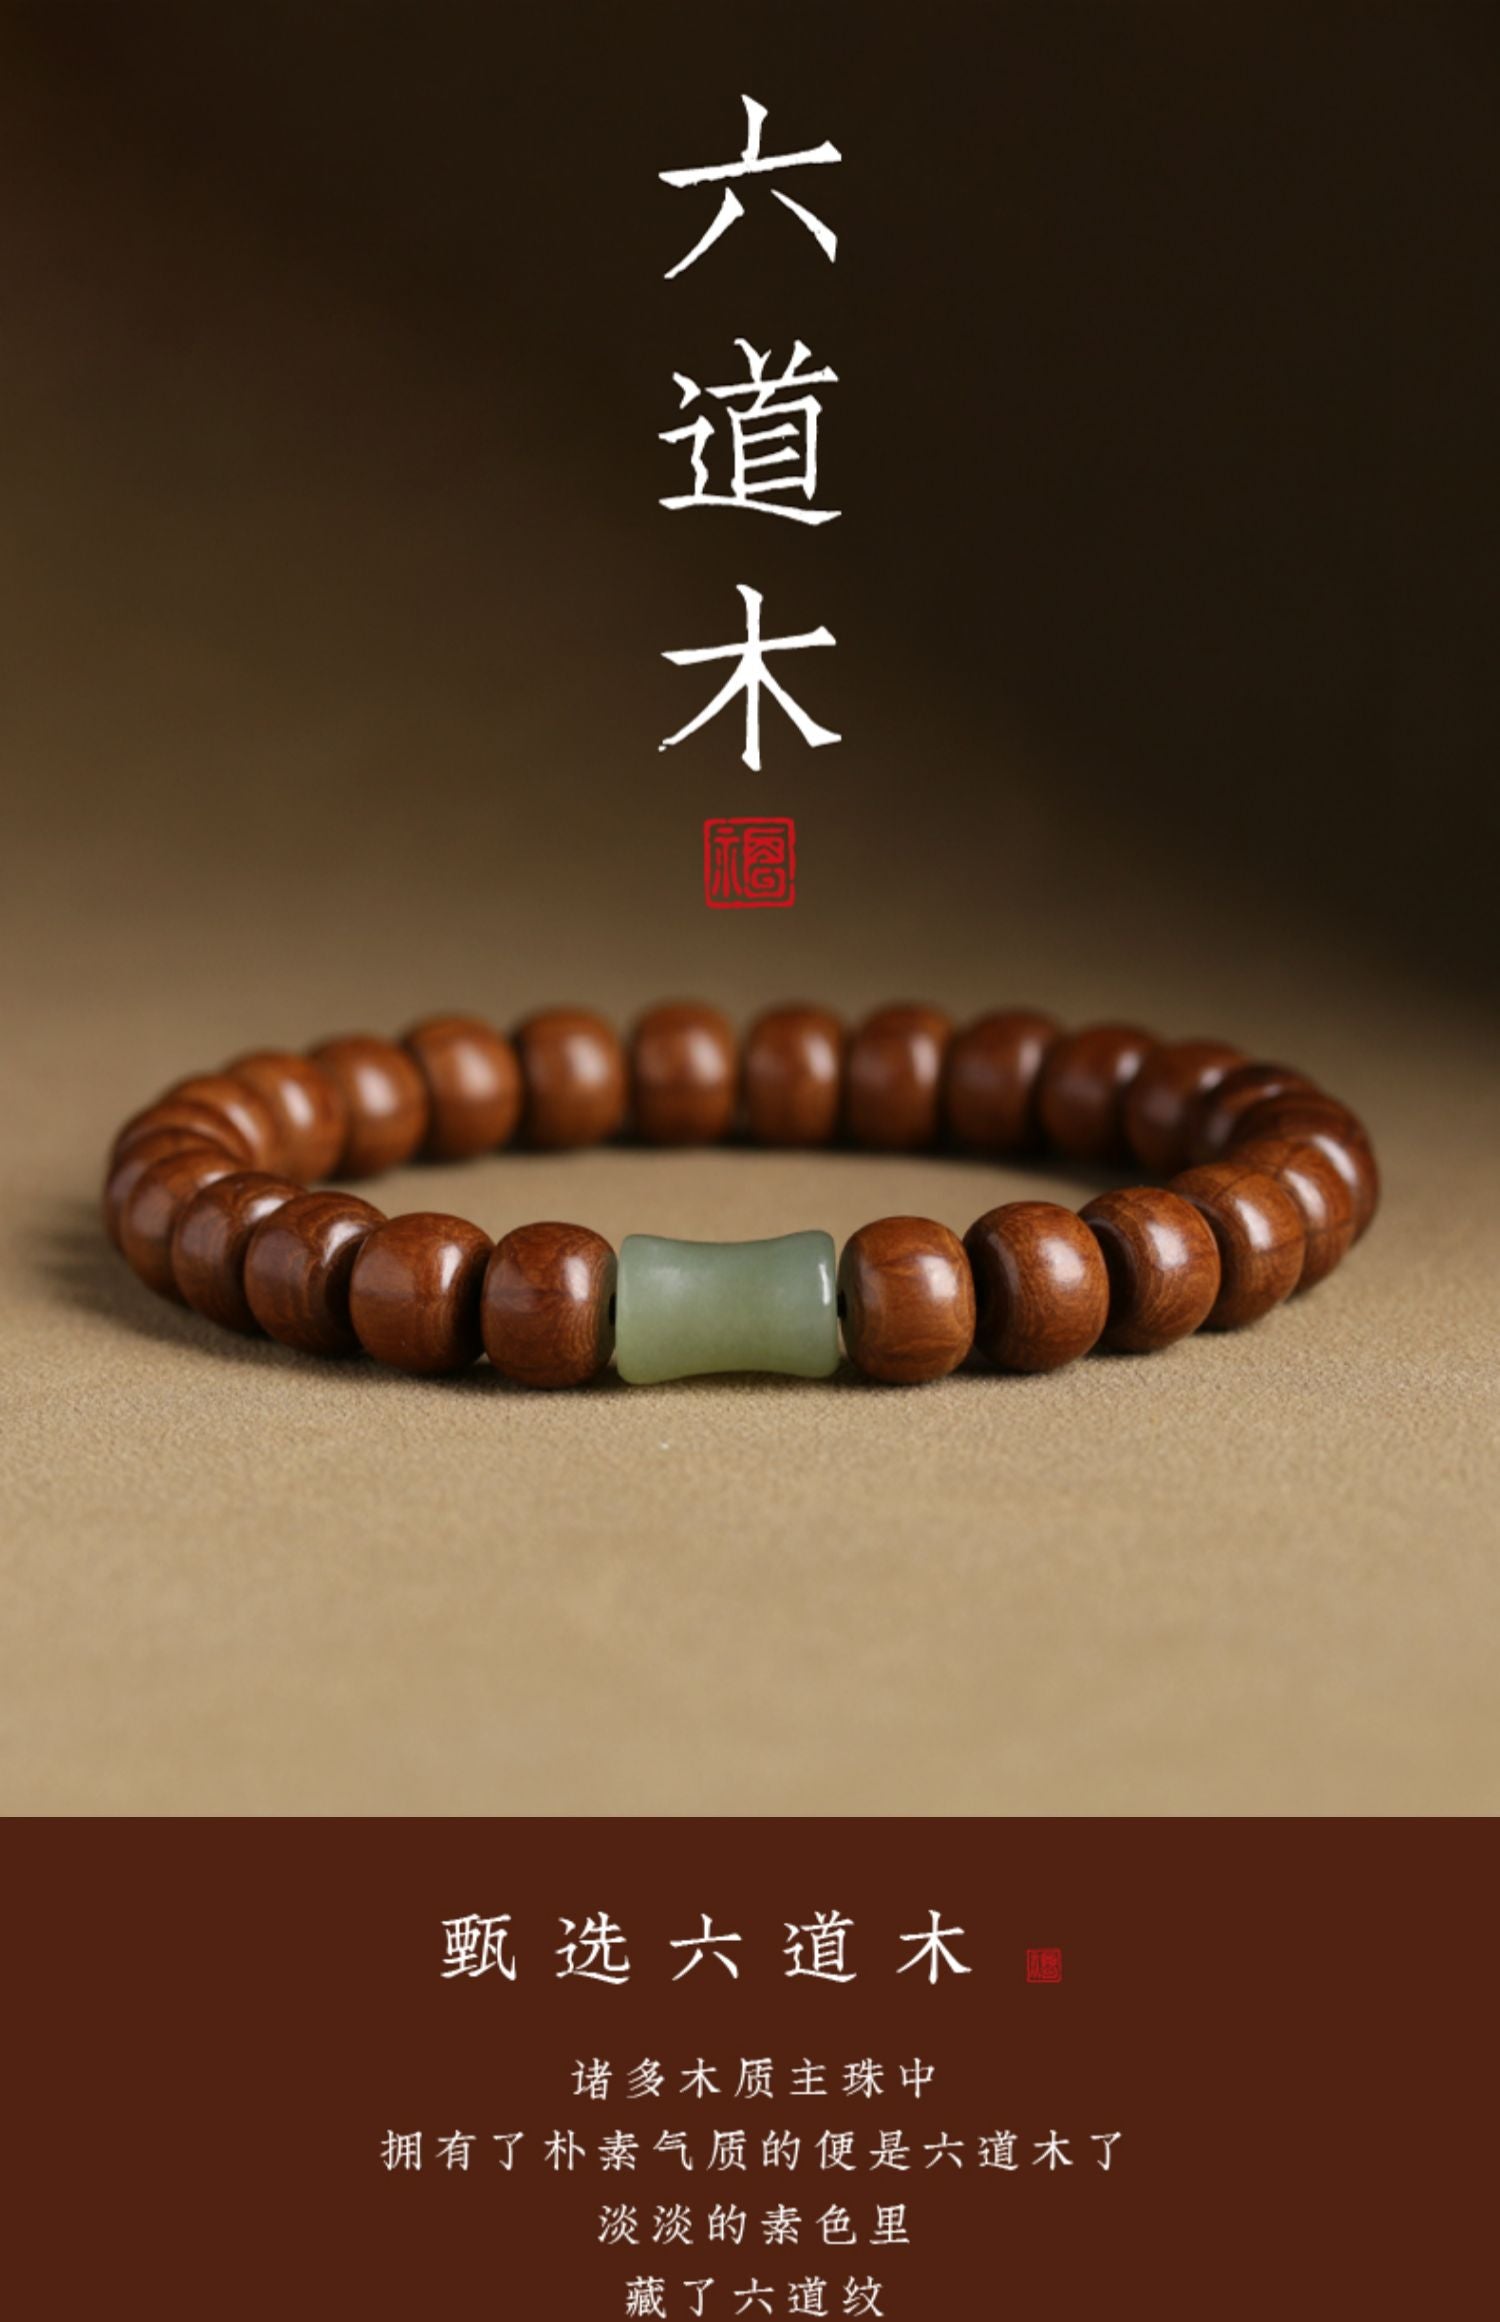 Agarwood Hetian Jade Bamboo Joint Bracelet